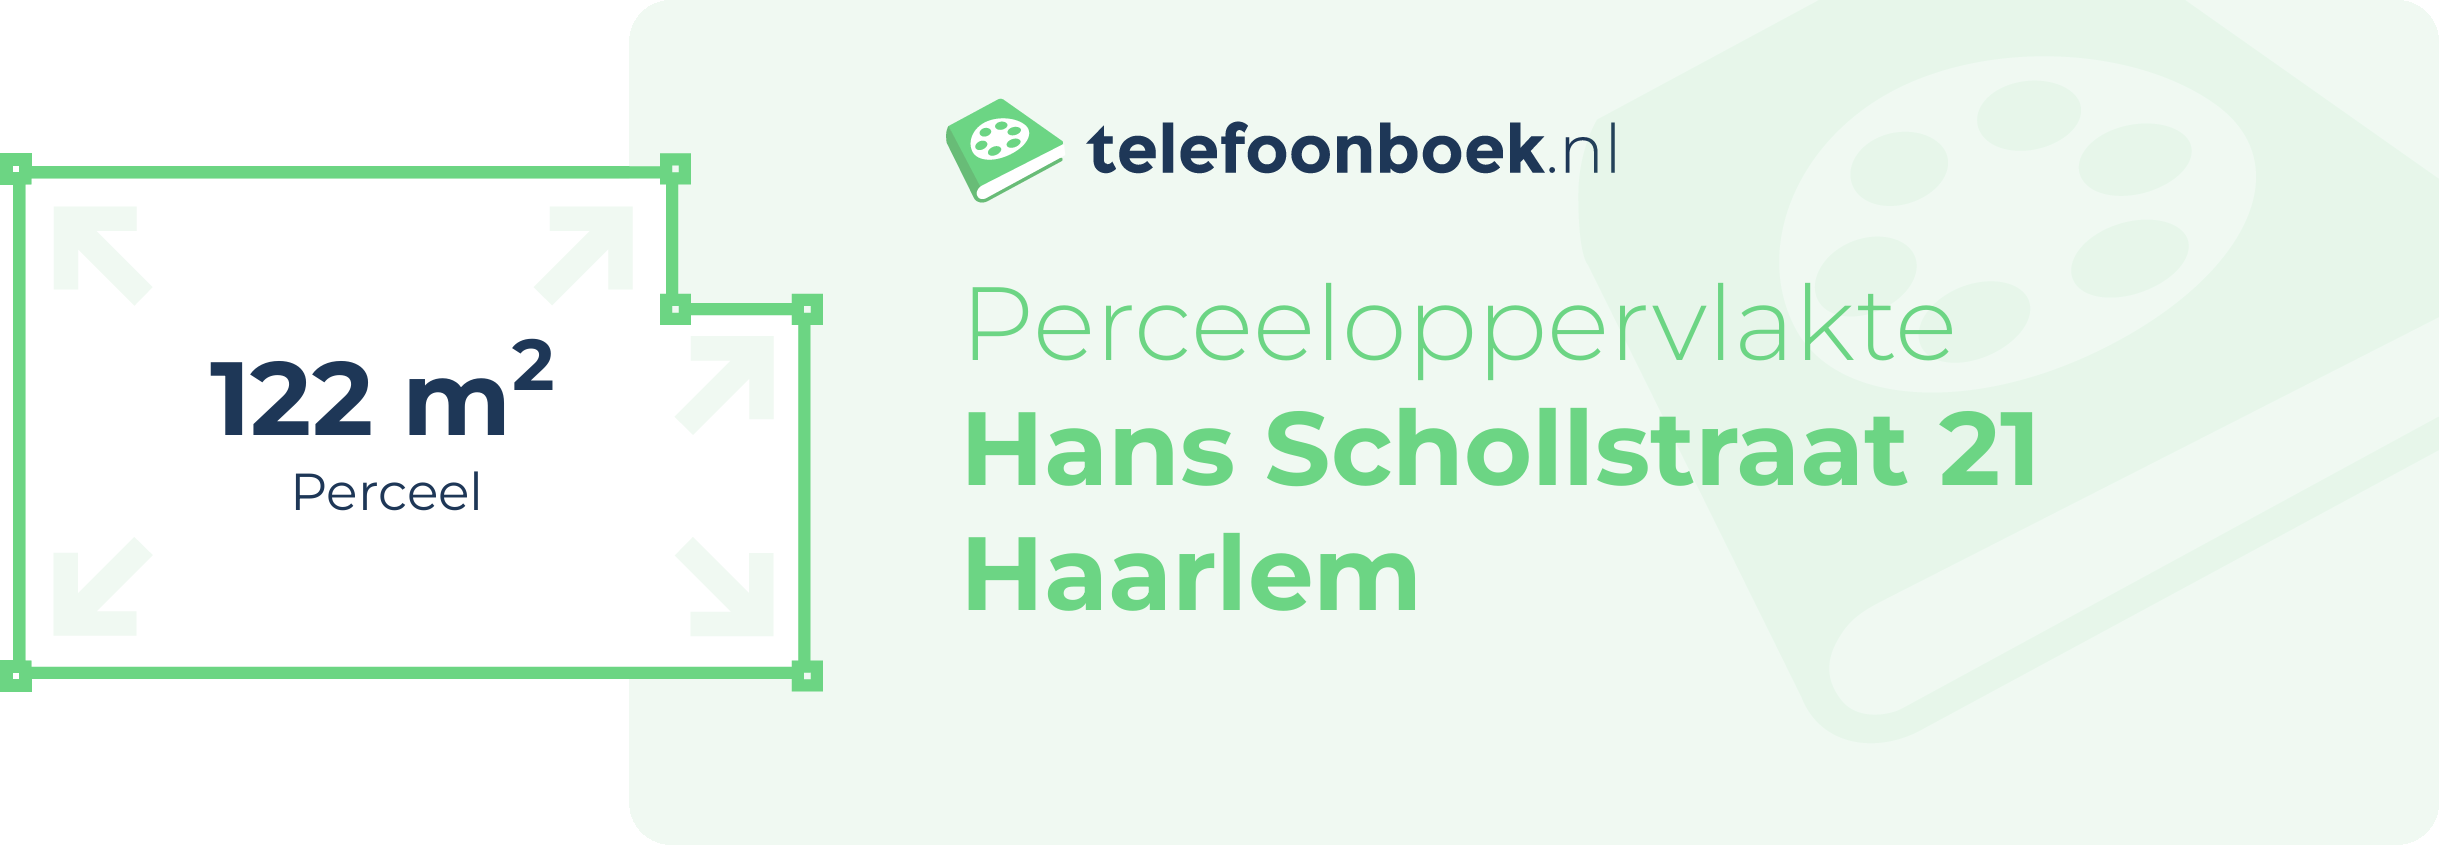 Perceeloppervlakte Hans Schollstraat 21 Haarlem